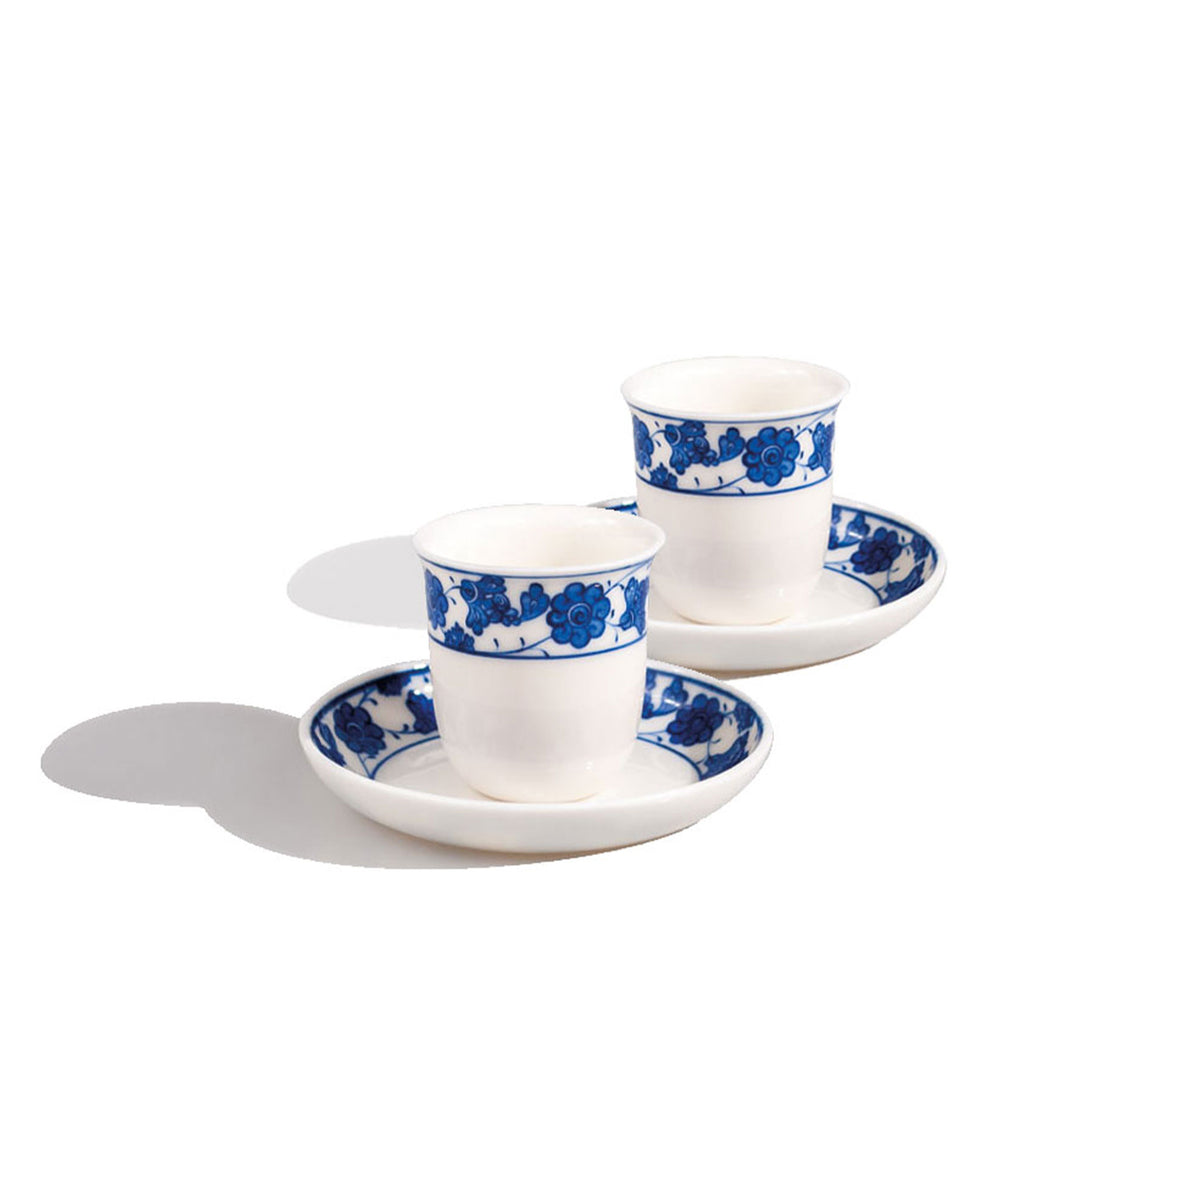 Lotus pattern blue-white transparent turkish coffee porcelain cup set